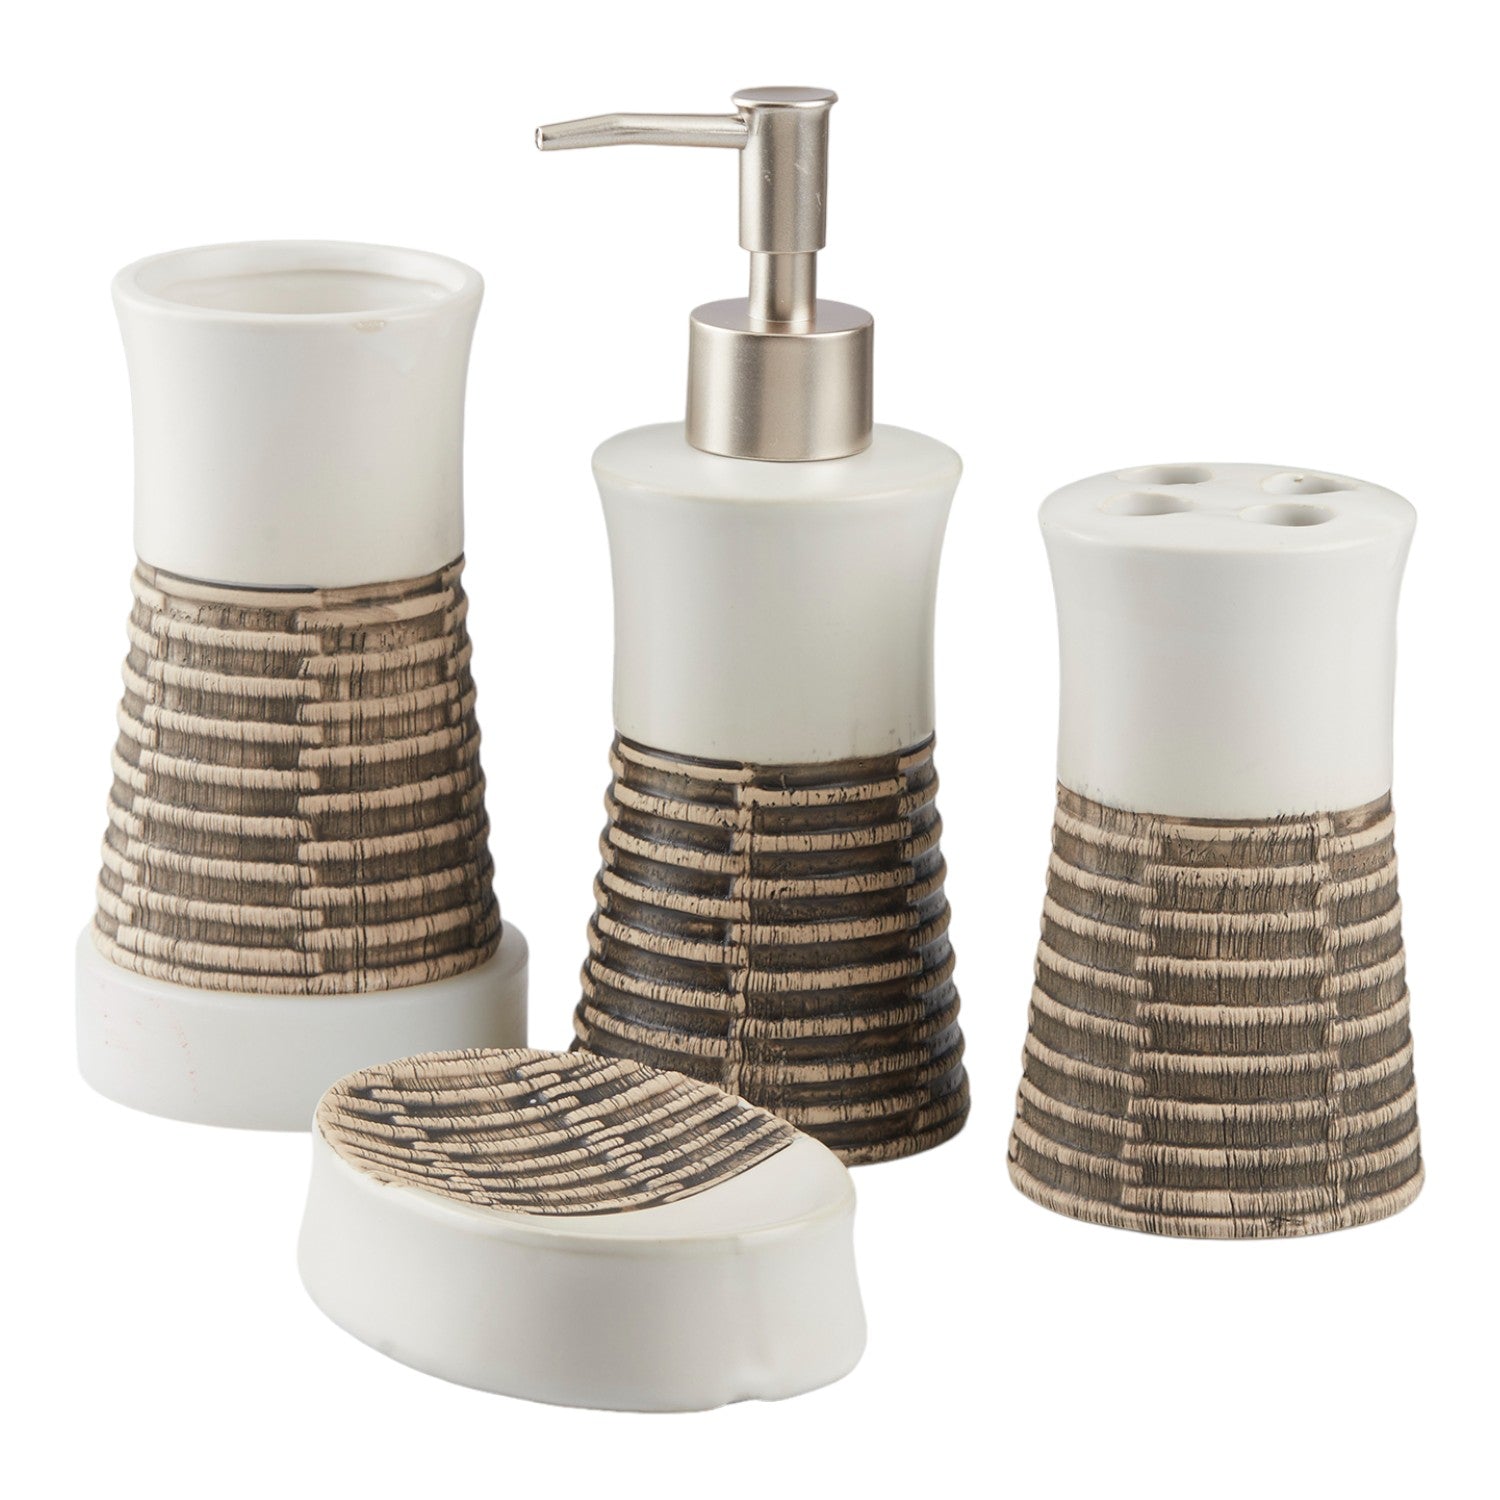 Ceramic Bathroom Set of 4 with Soap Dispenser (10436)